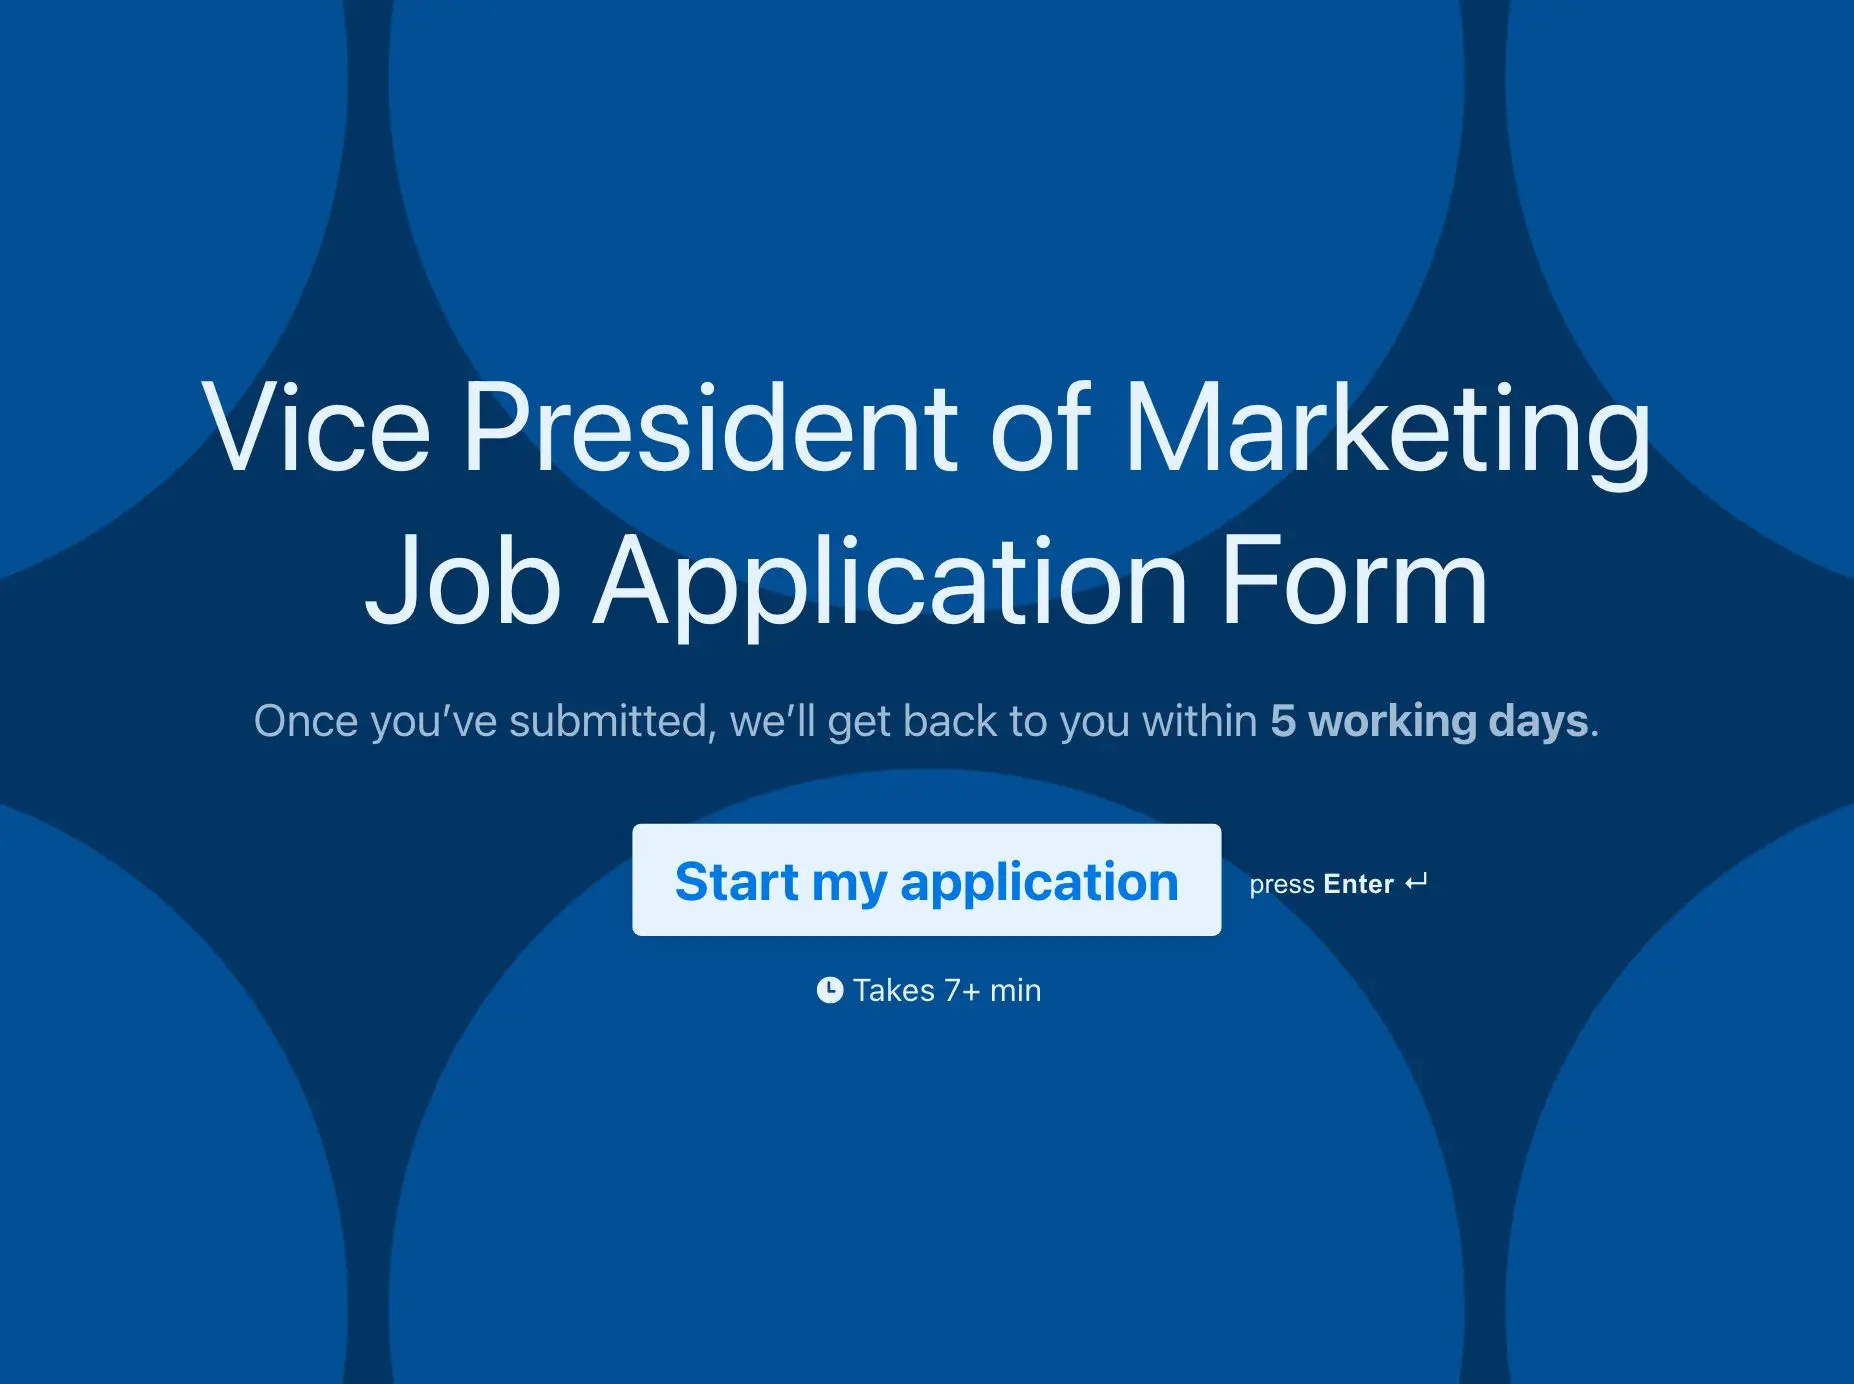 Vice President of Marketing Job Application Form Template Hero